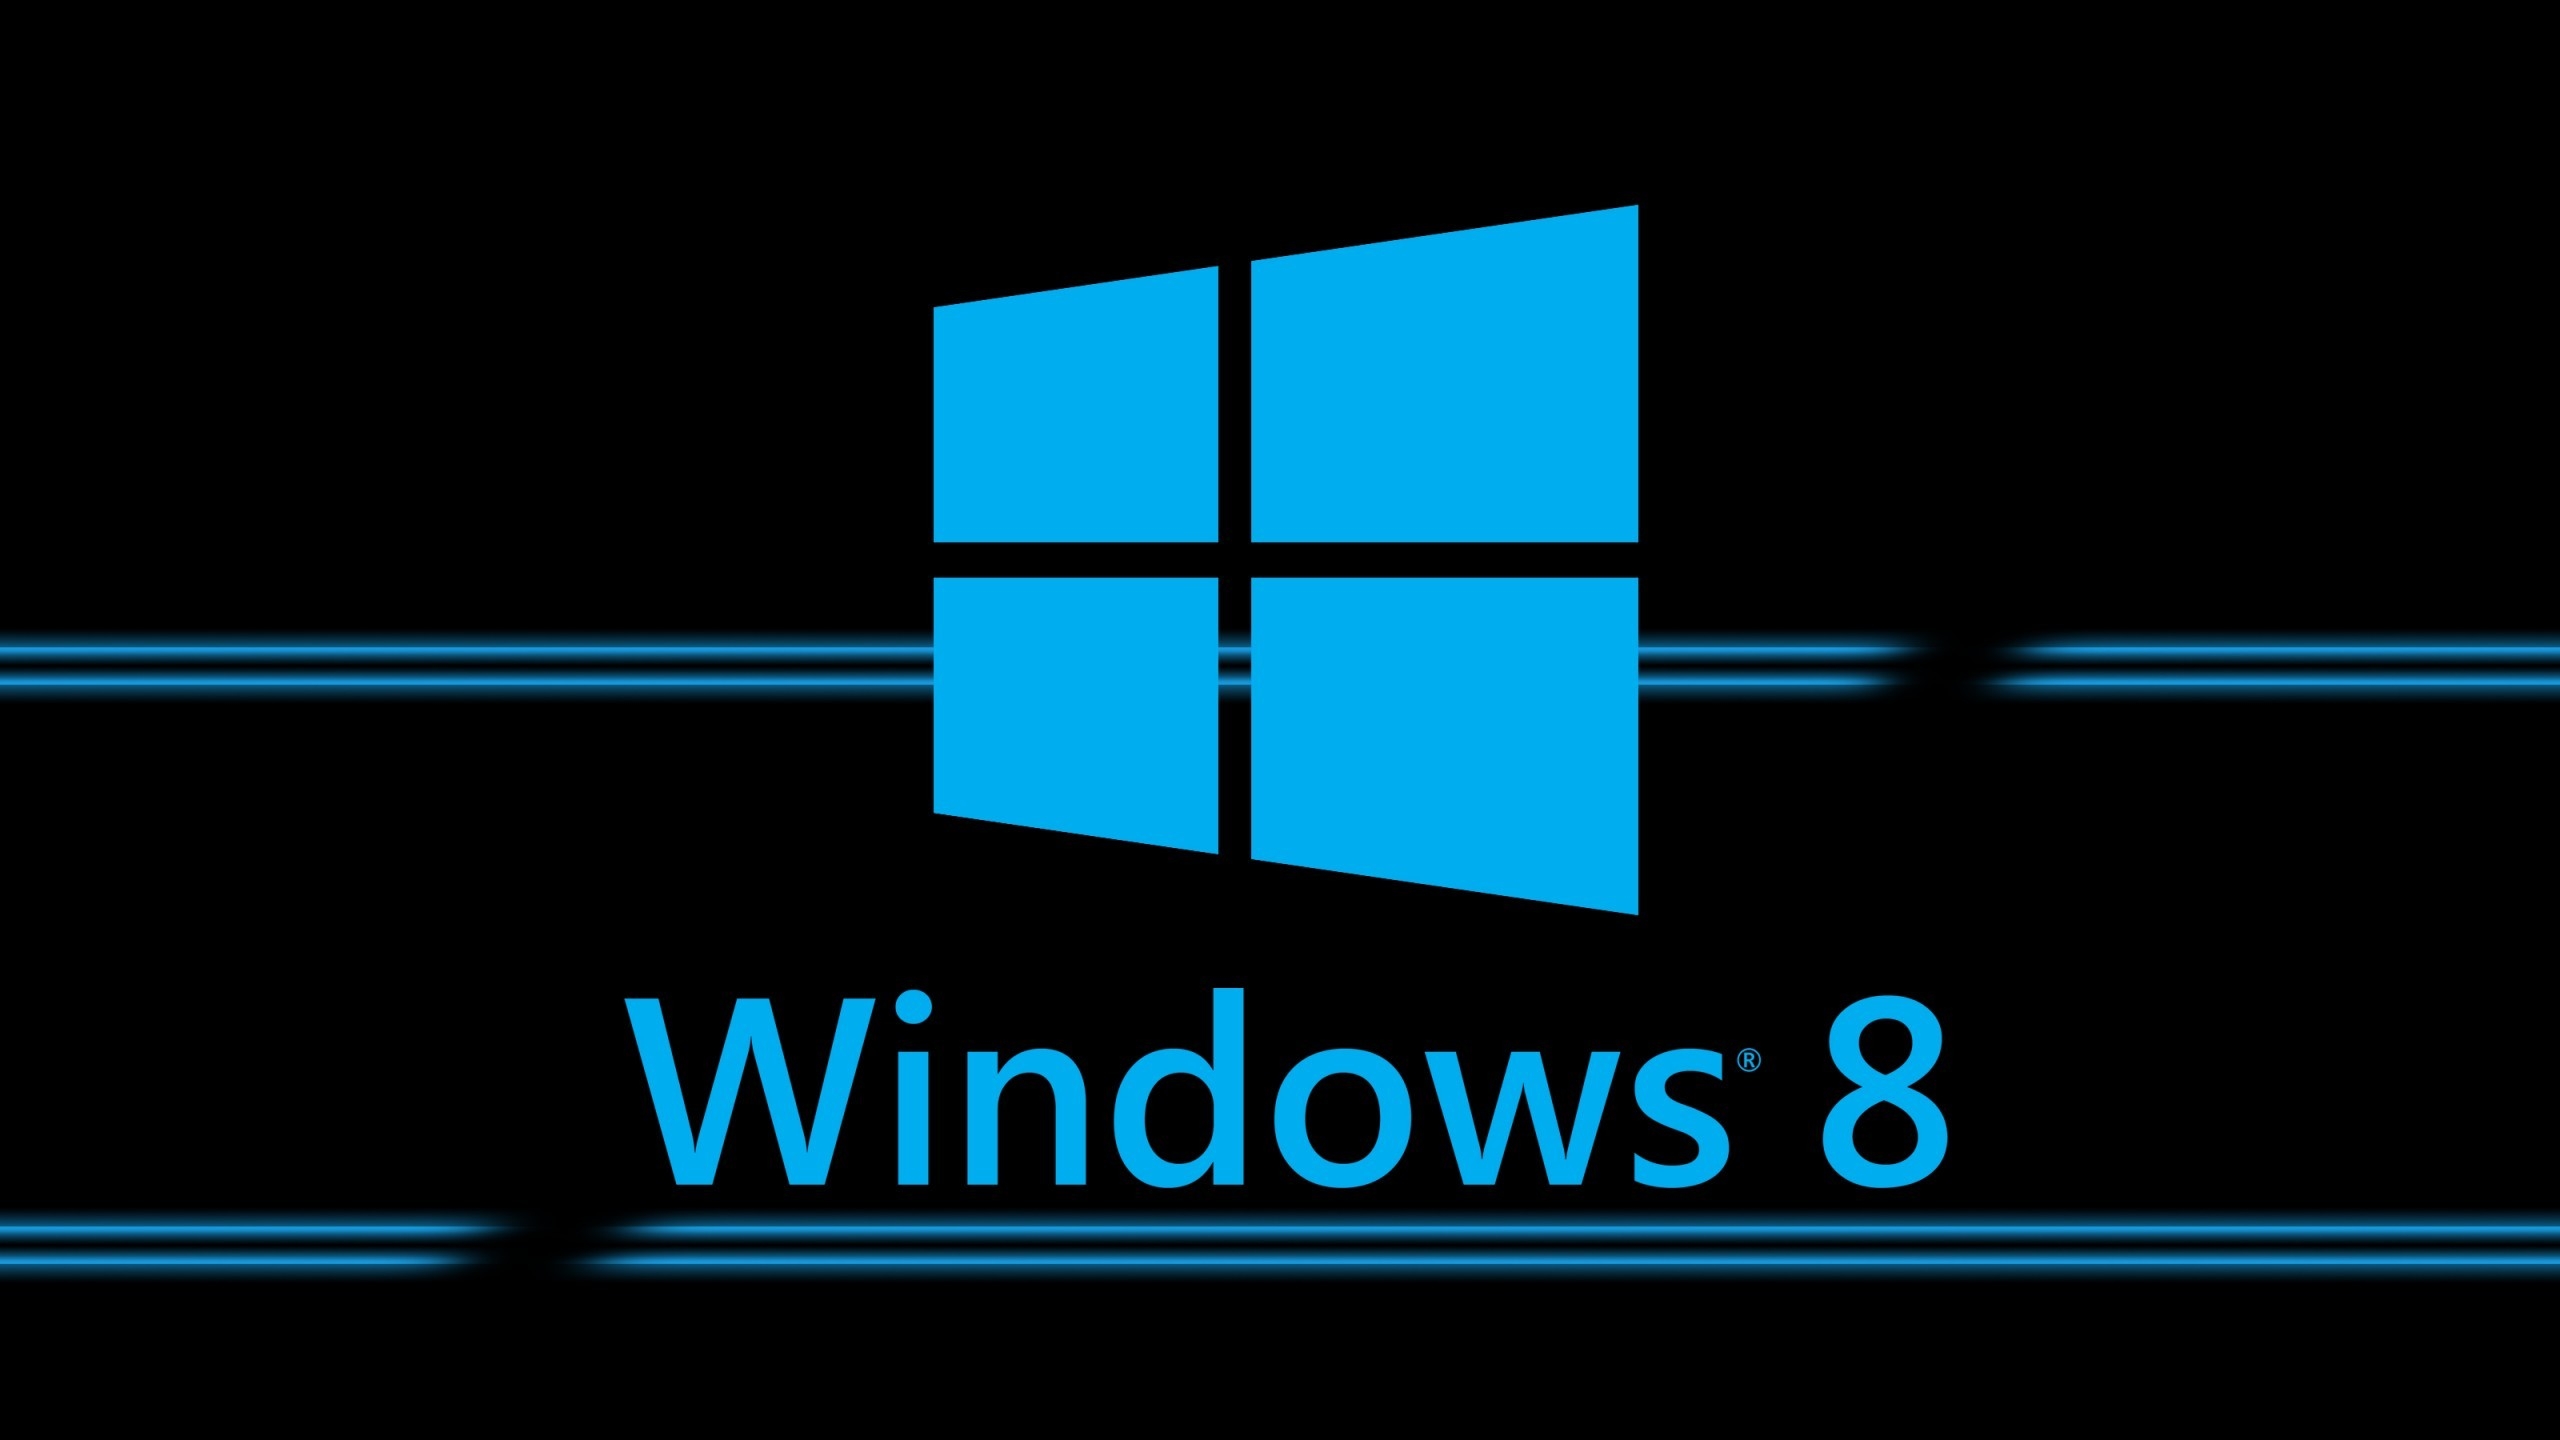 Windows 8 New for 2560x1440 HDTV resolution